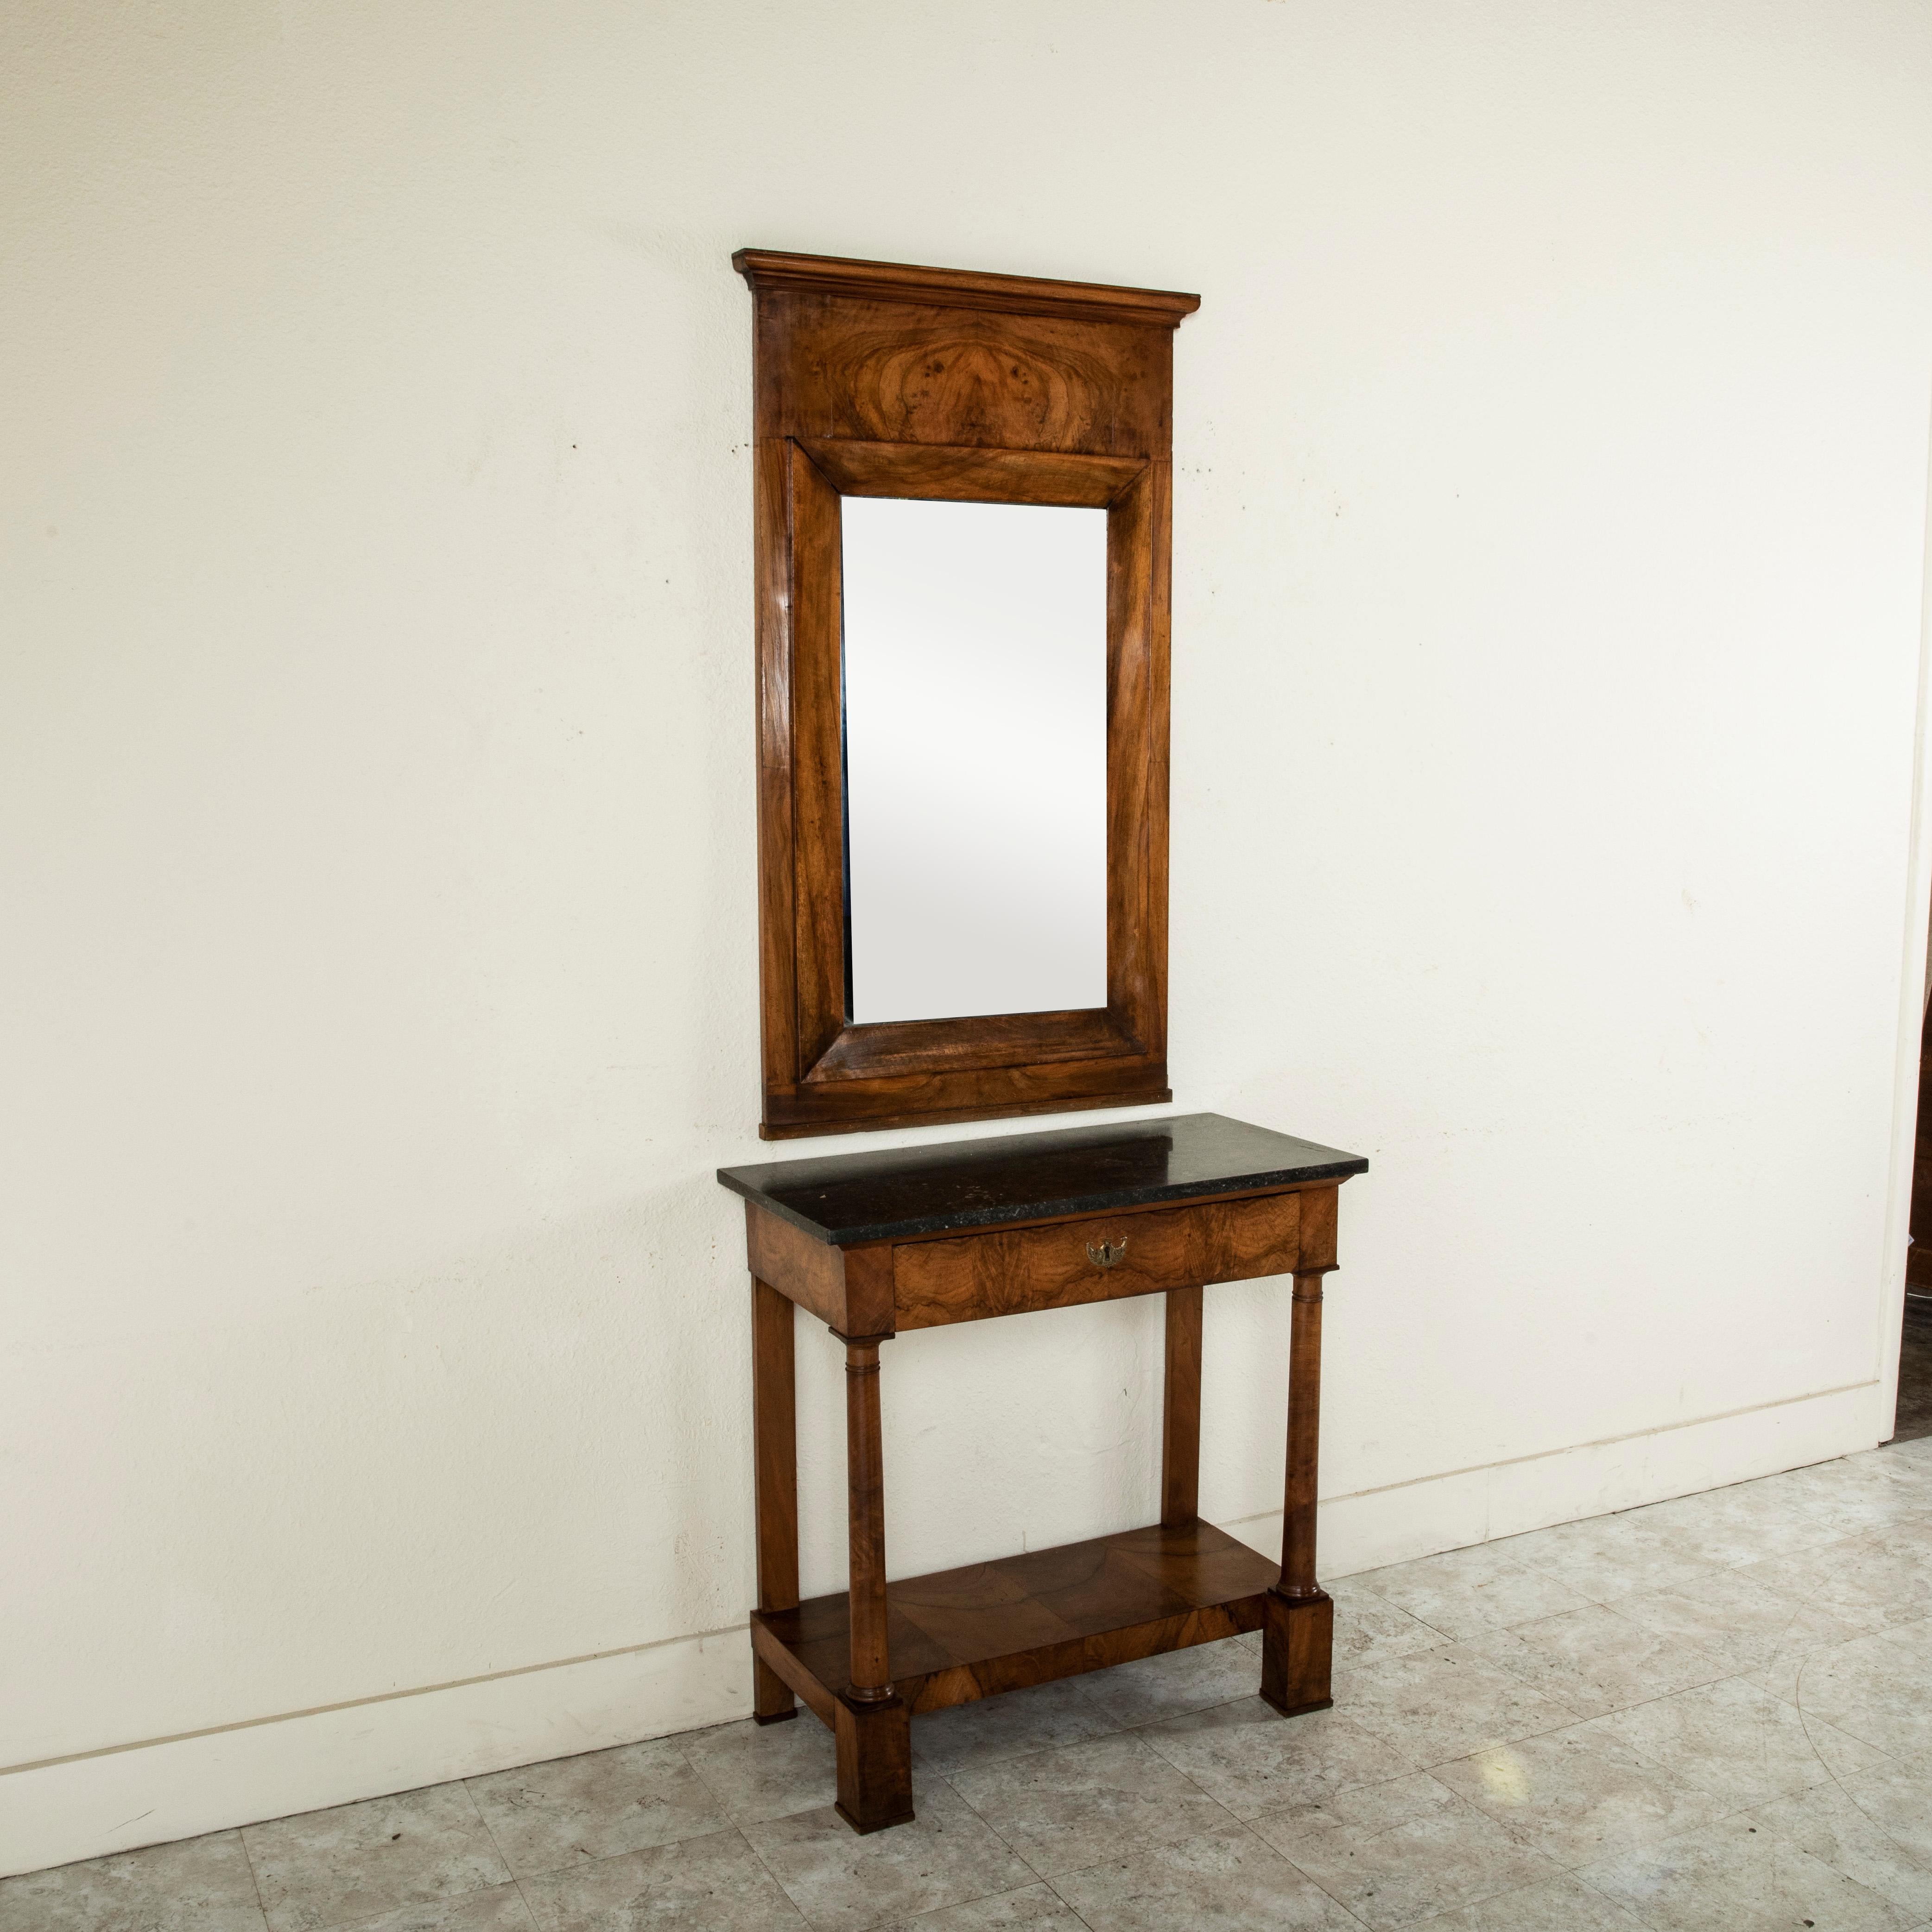 19th Century French Empire Period Burl Walnut Console Table and Detached Mirror, circa 1810